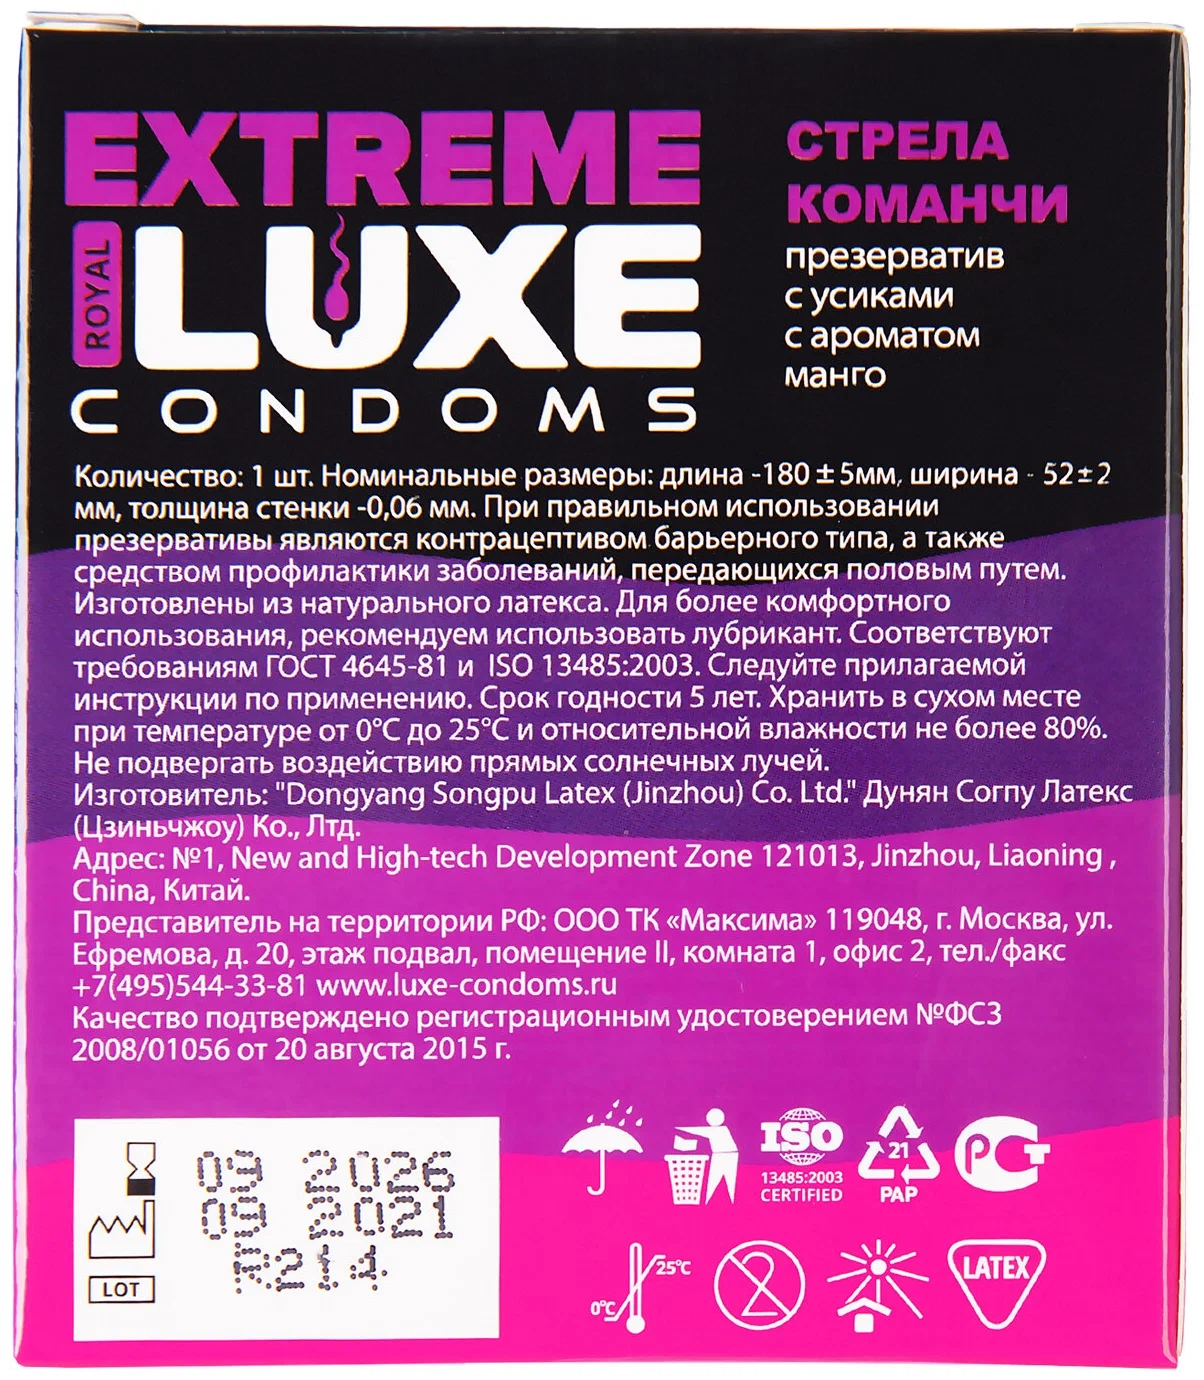 Luxe BLACK ULTIMATE Презерватив Стрела Команчи (Манго) 1шт. 